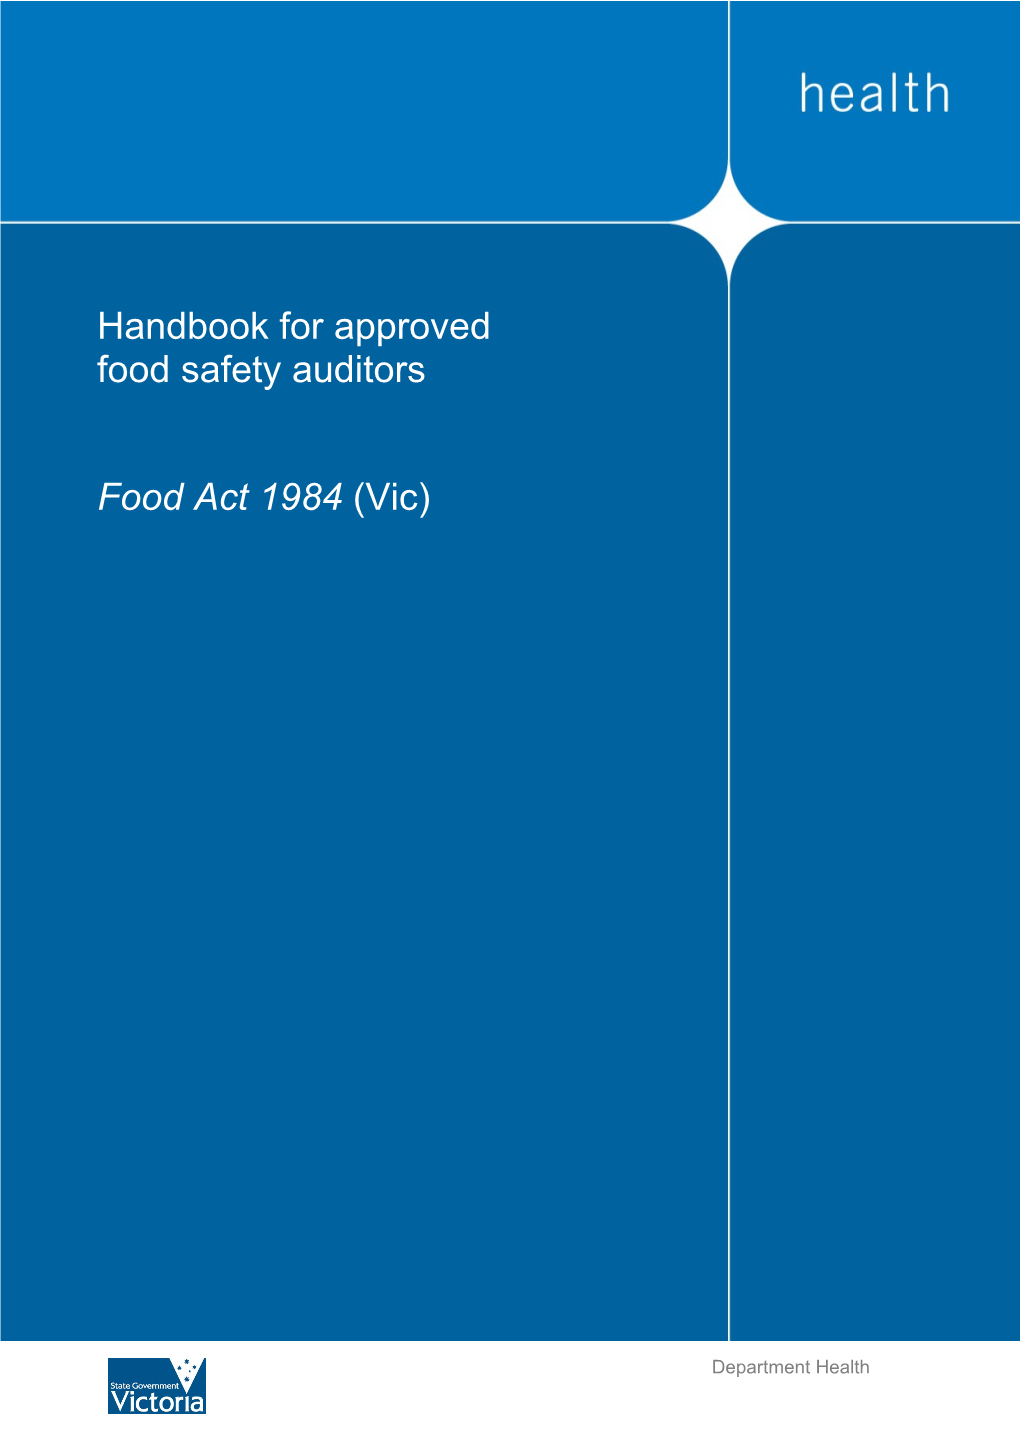 Handbook for Food Safety Auditors